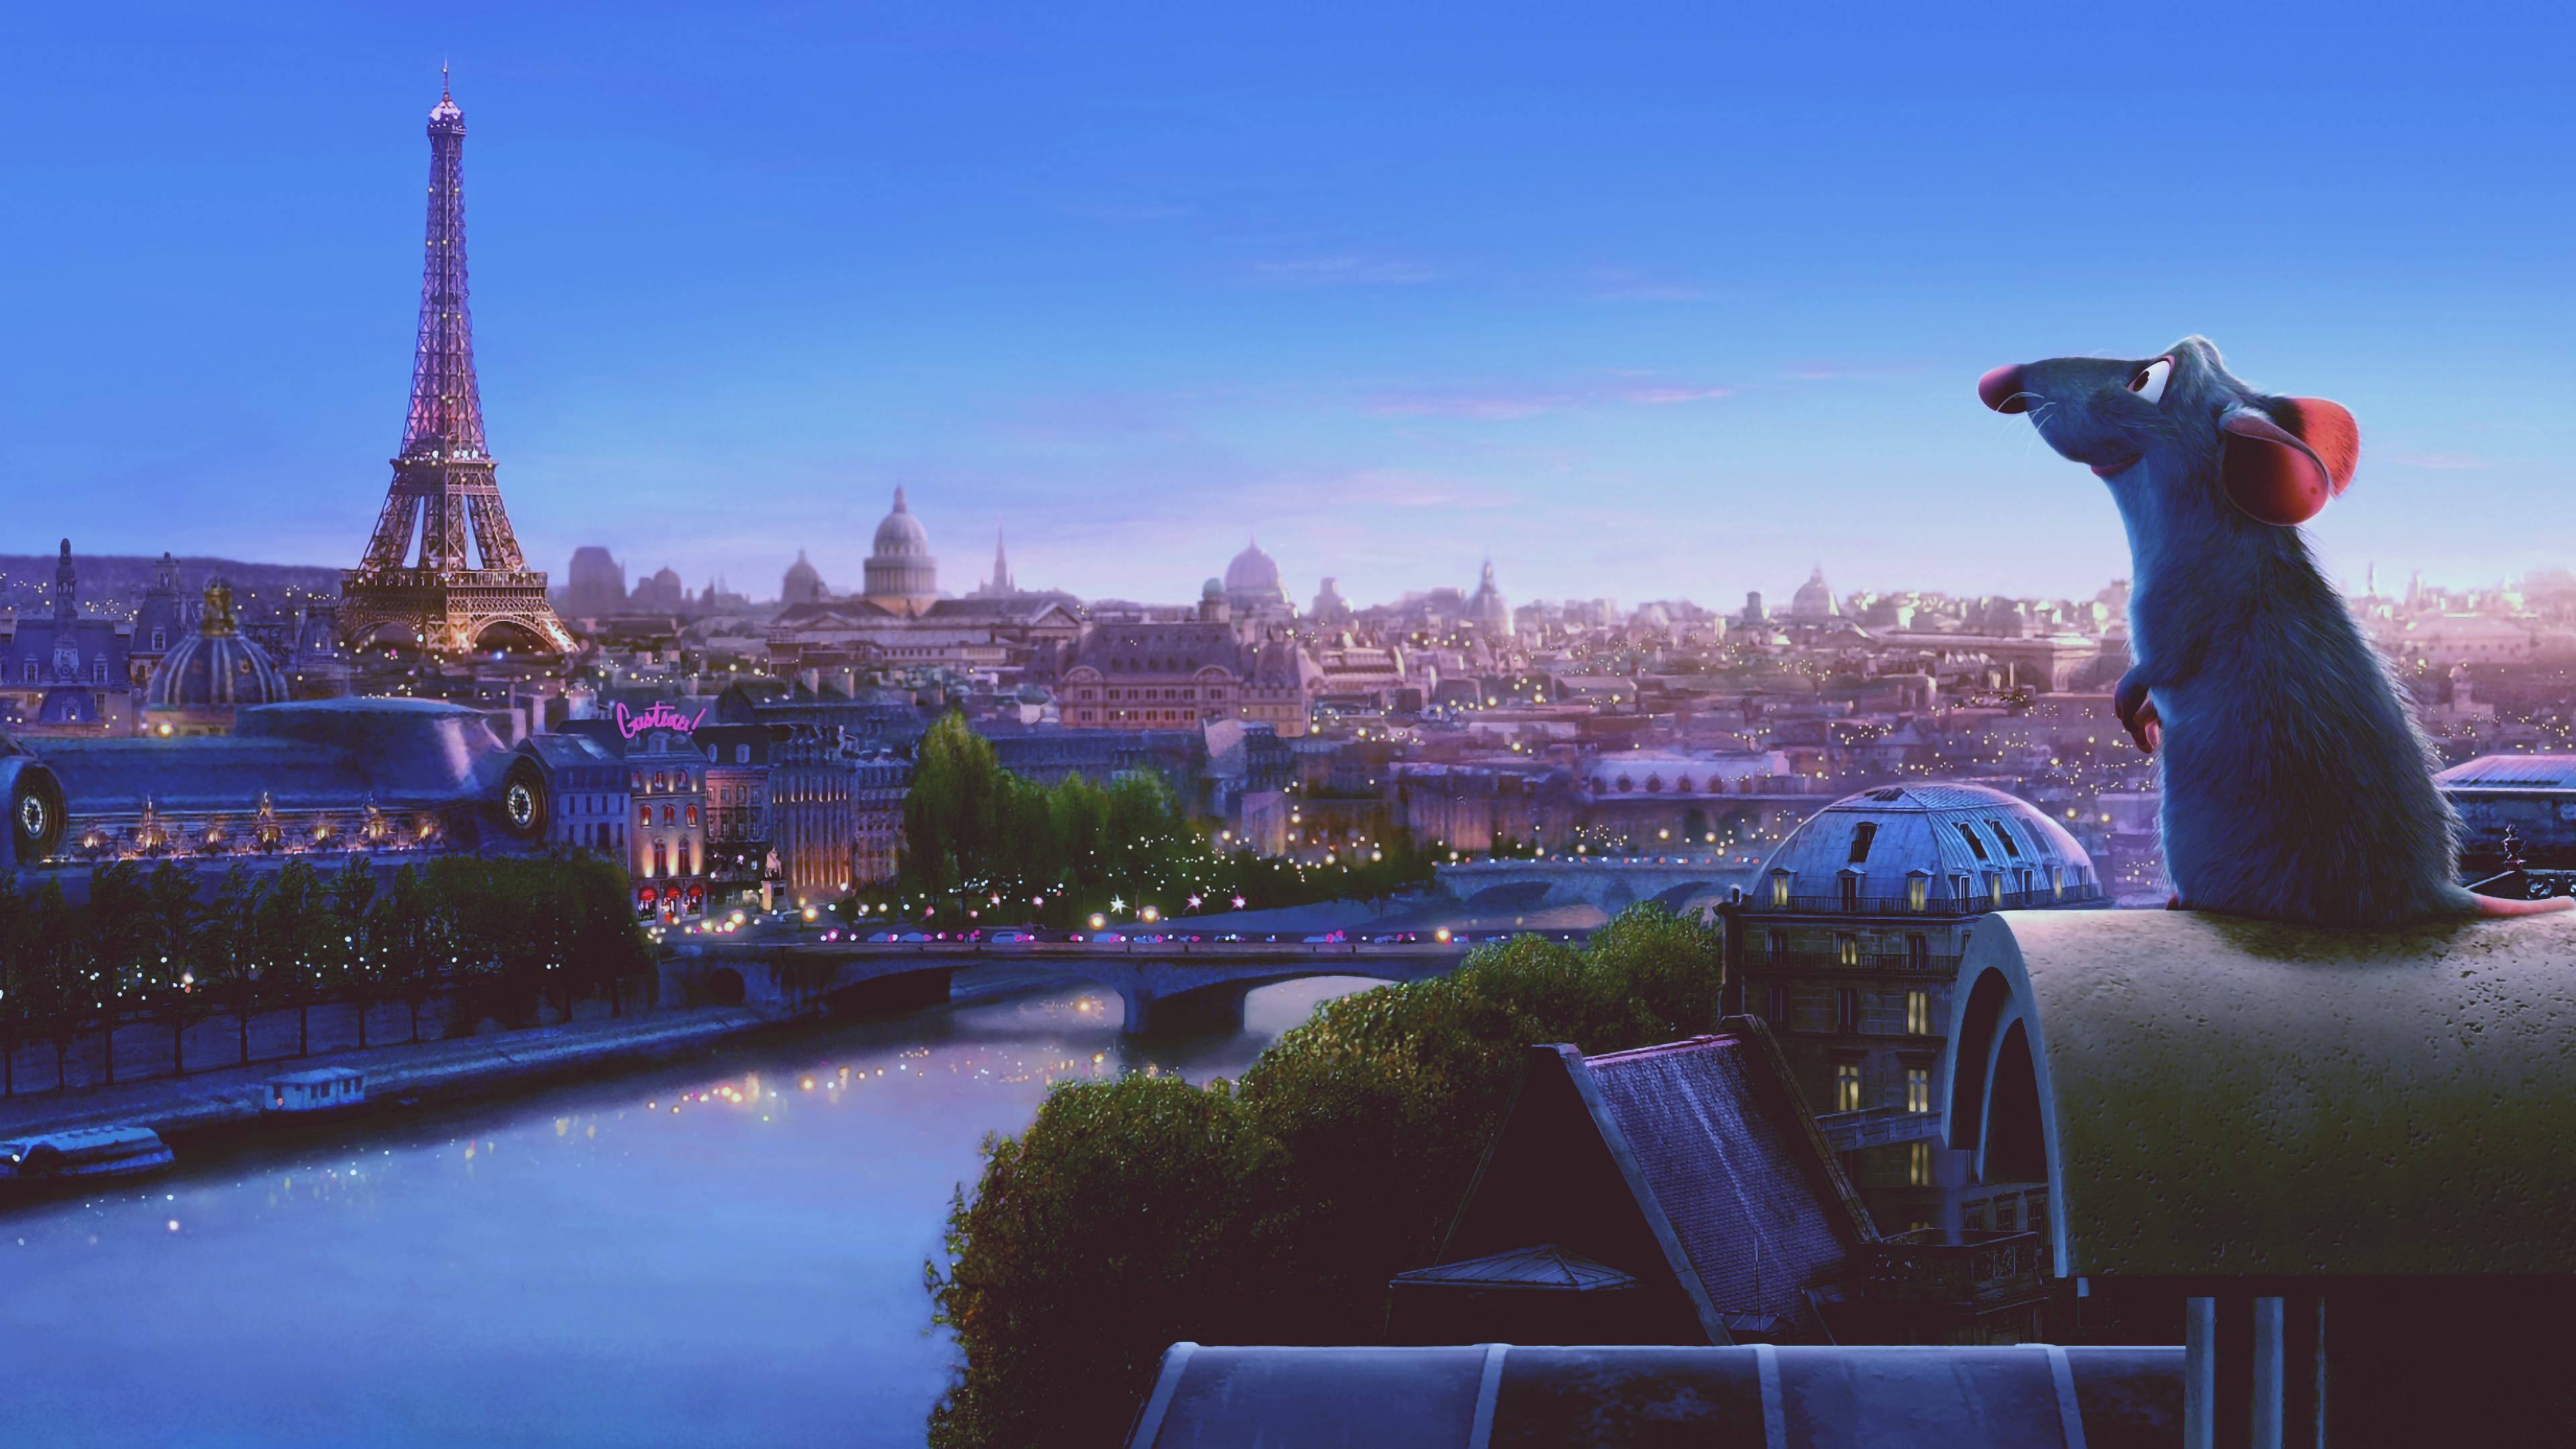 General 3840x2160 Ratatouille rats Paris city lights dusk city digital art cartoon animated movies film stills